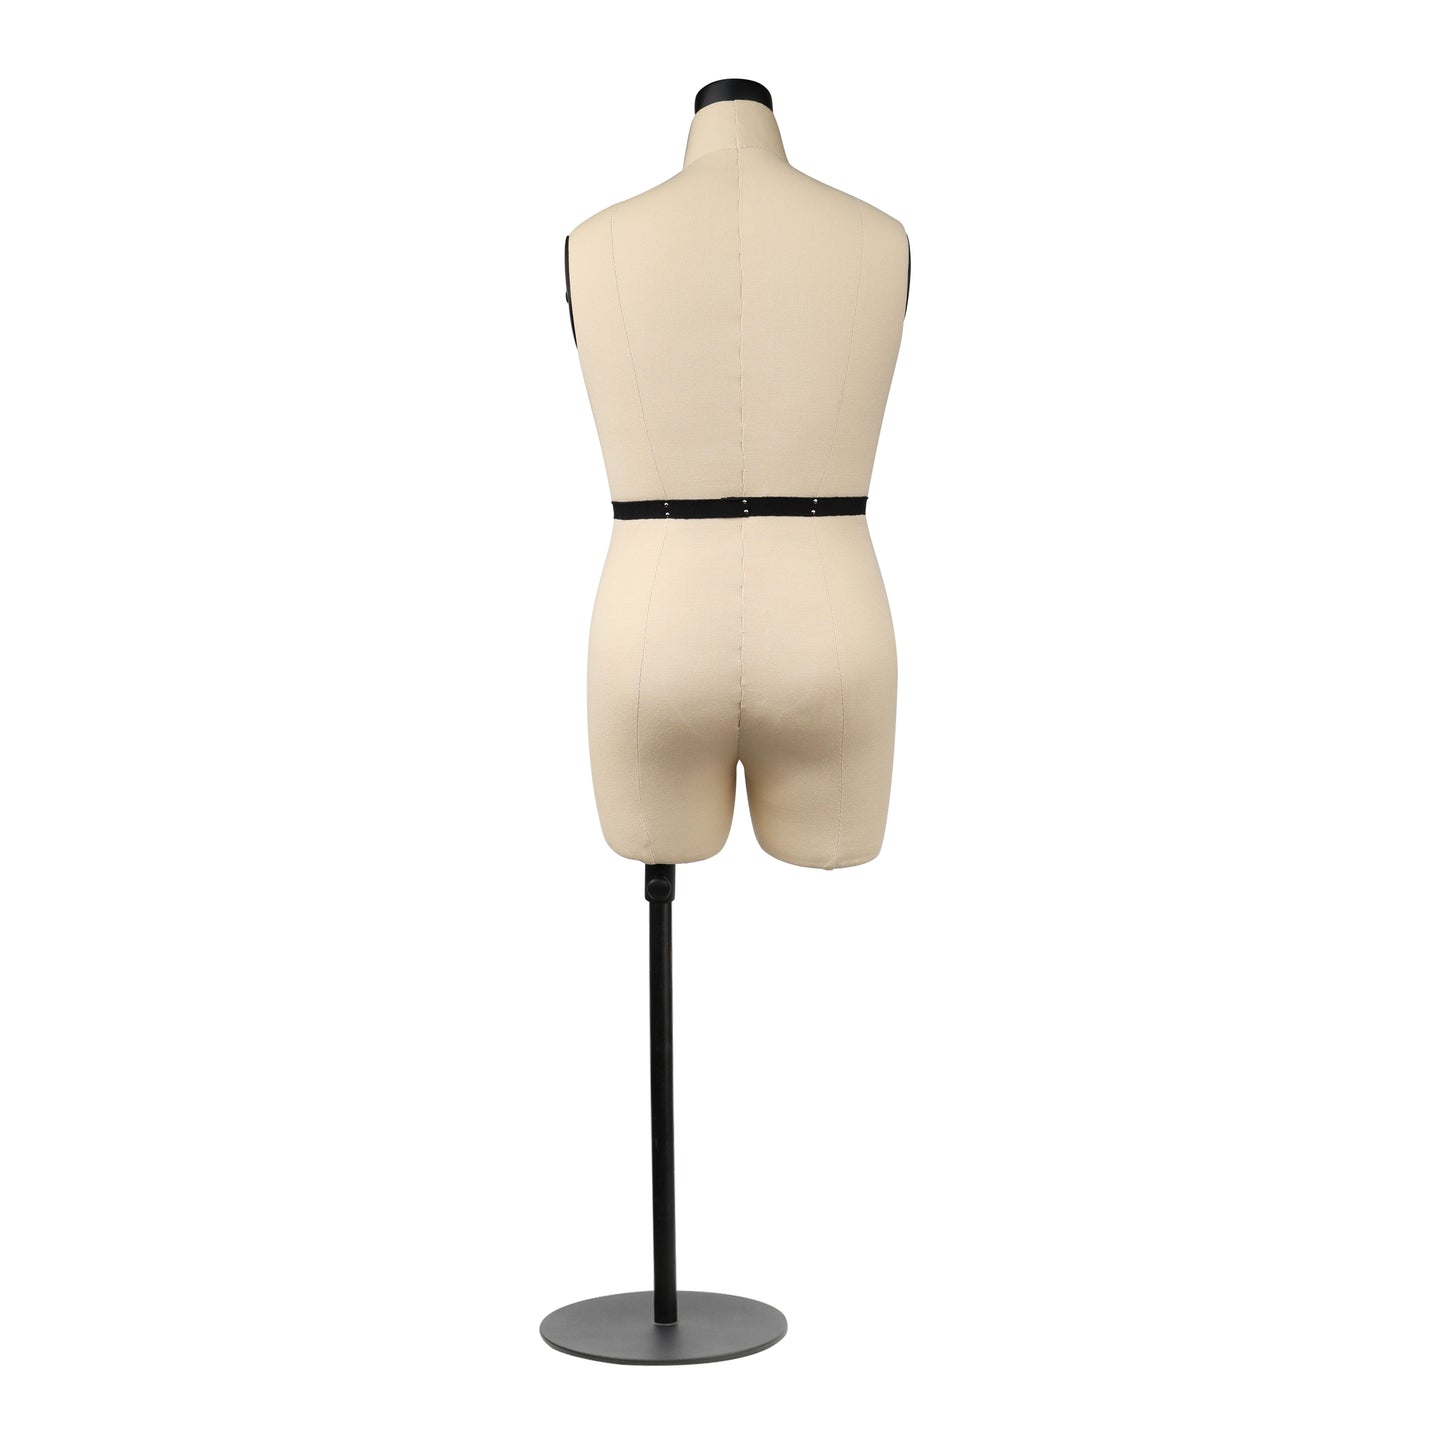 DL264 Half Scale Men Dress Form 1/2 Male tailor dummy trouser Mannequin with 32cm soft arms,half size male sewing form,48cm fitting form DE-LIANG